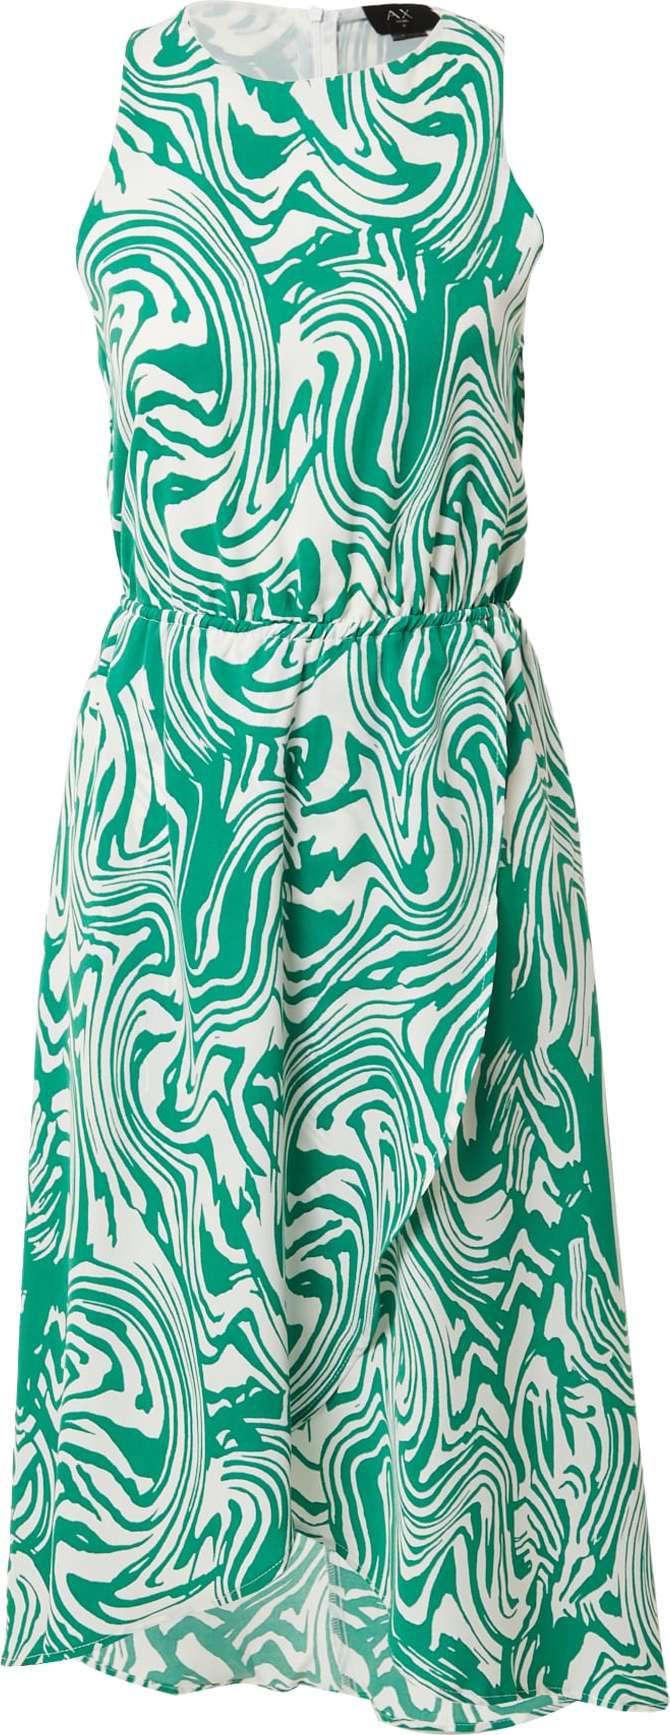 Letní šaty AX Paris zelená / bílá